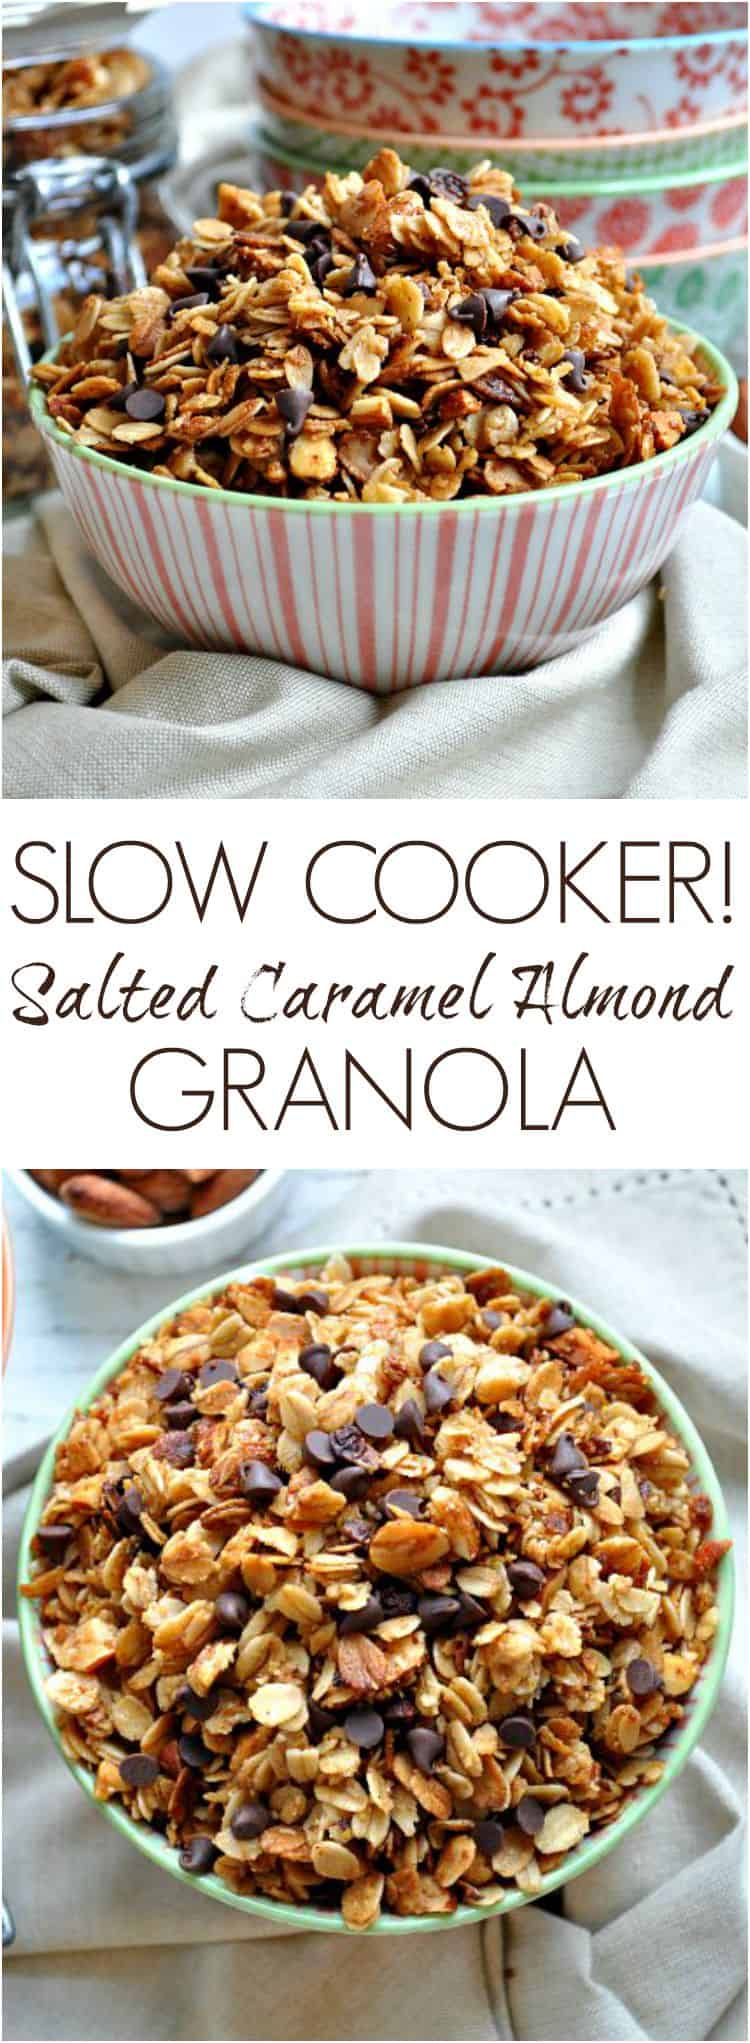 Slow Cooker Salted Caramel Almond Granola